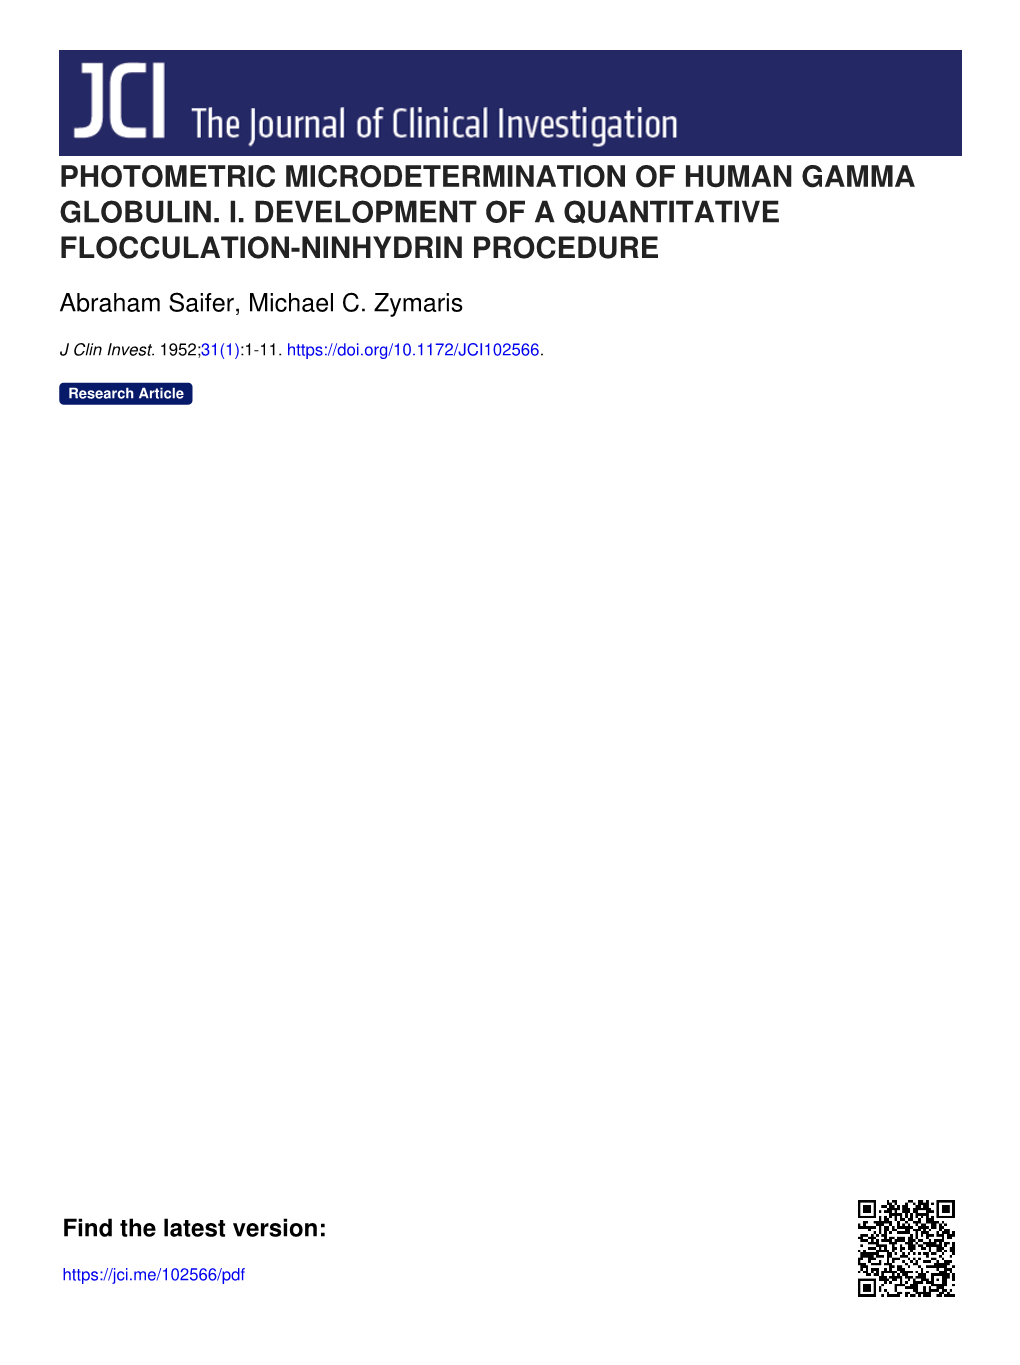 Photometric Microdetermination of Human Gamma Globulin. I